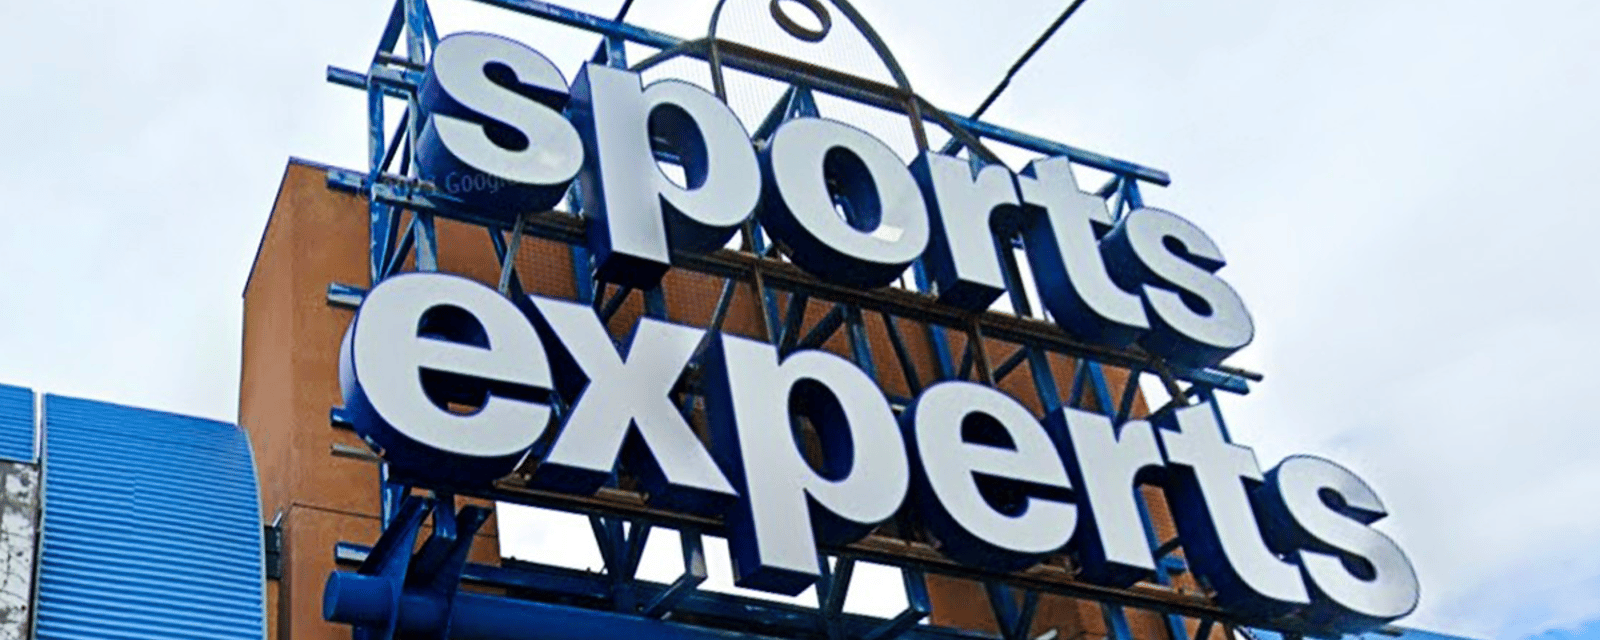 Un magasin de Sports Experts contraint de fermer ses portes